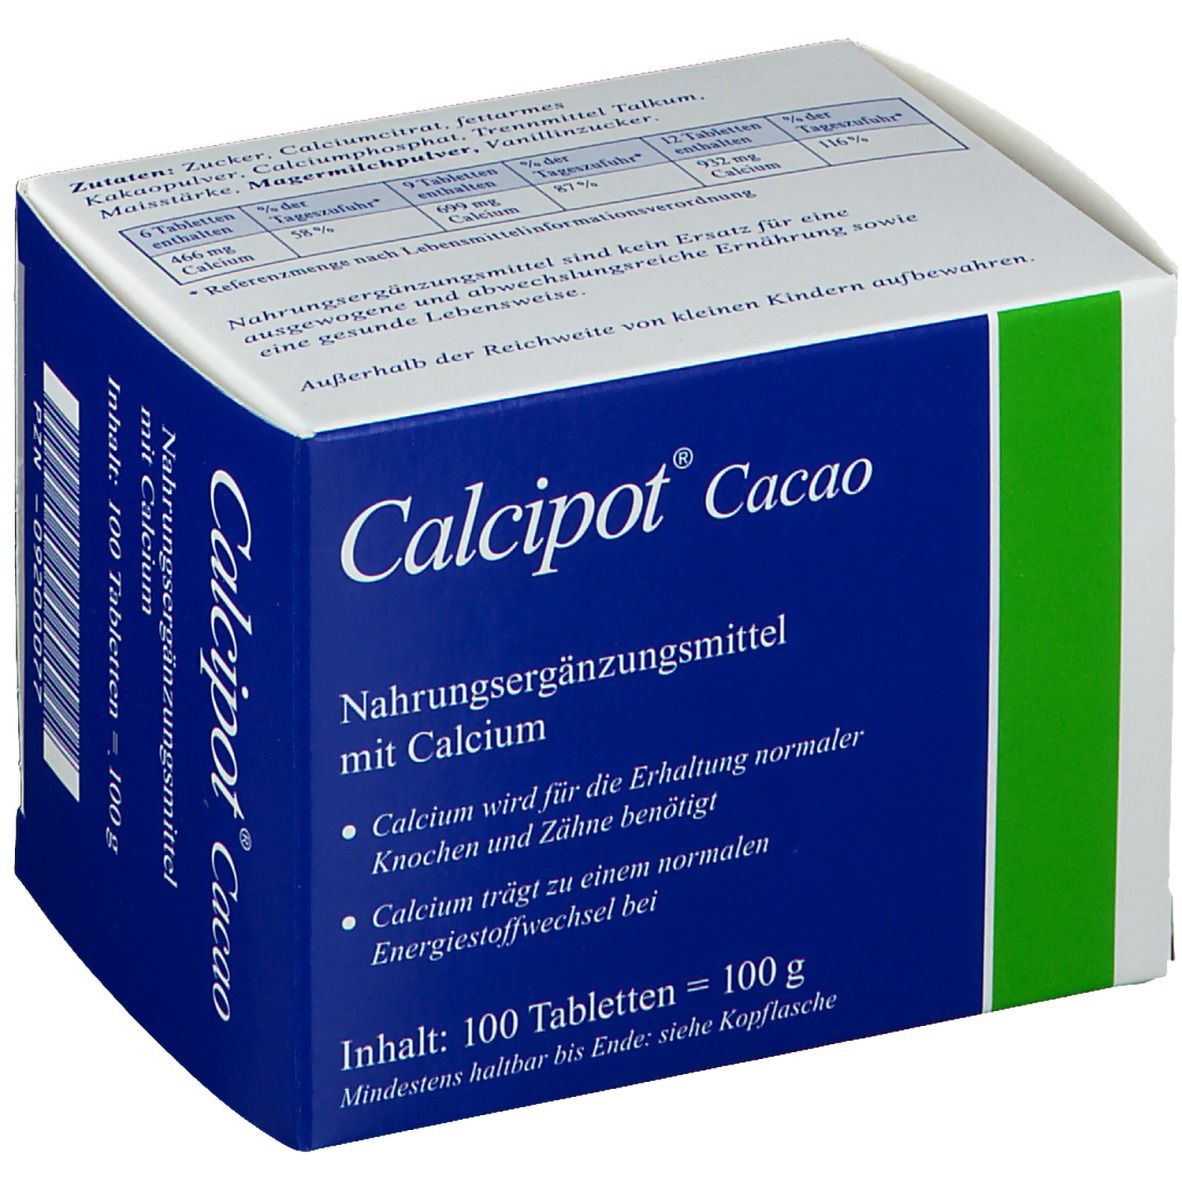 Calcipot® Cacao Kautabletten